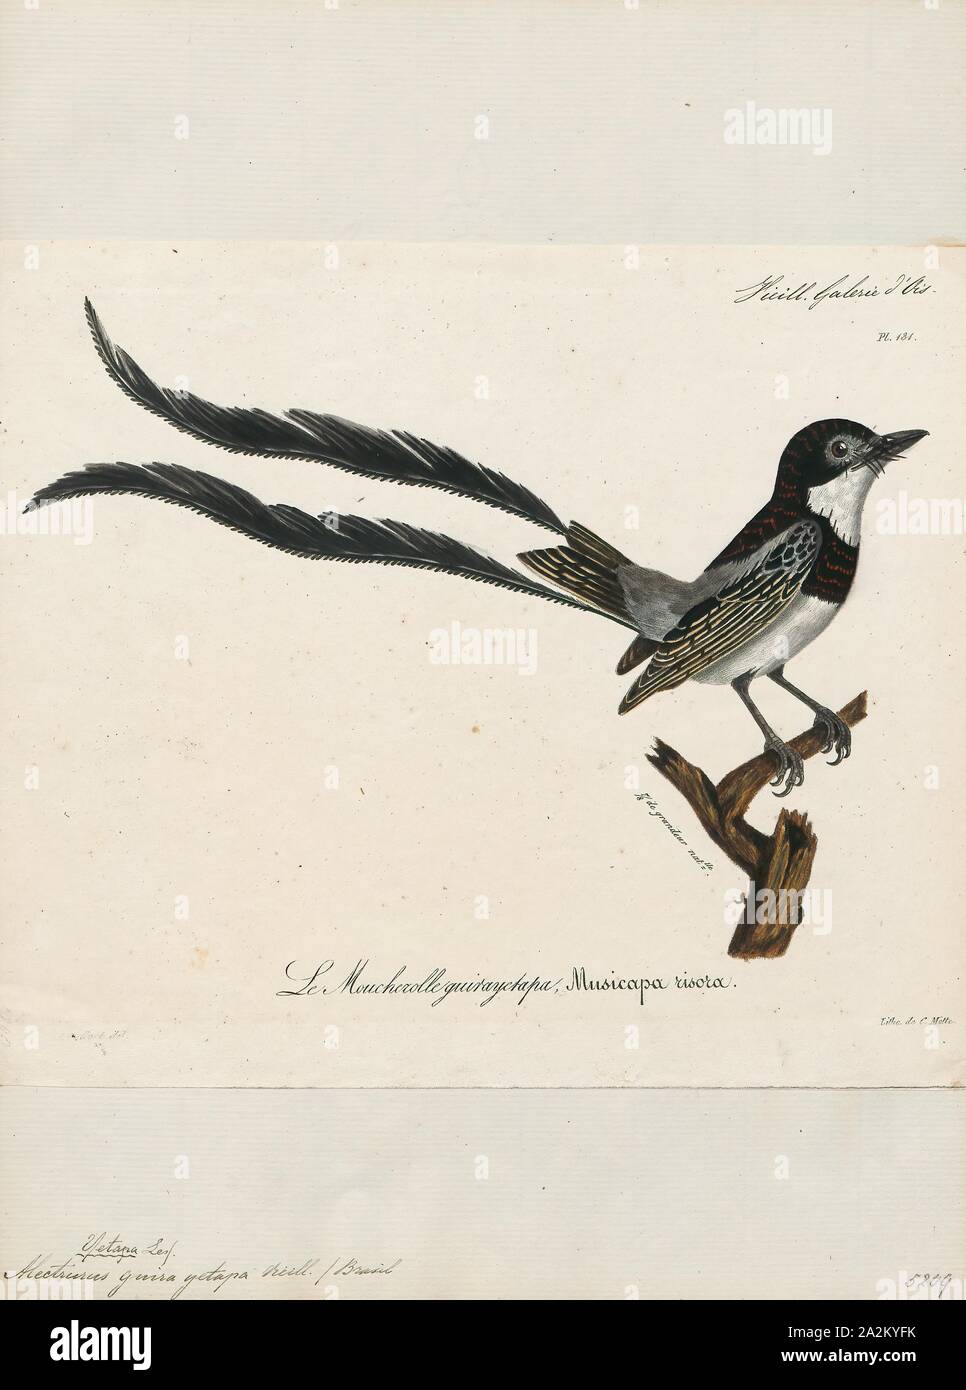 Alectrurus guirayetapa, Print, Alectrurus is a genus of South American birds in the tyrant flycatcher family Tyrannidae., 1825-1834 Stock Photo